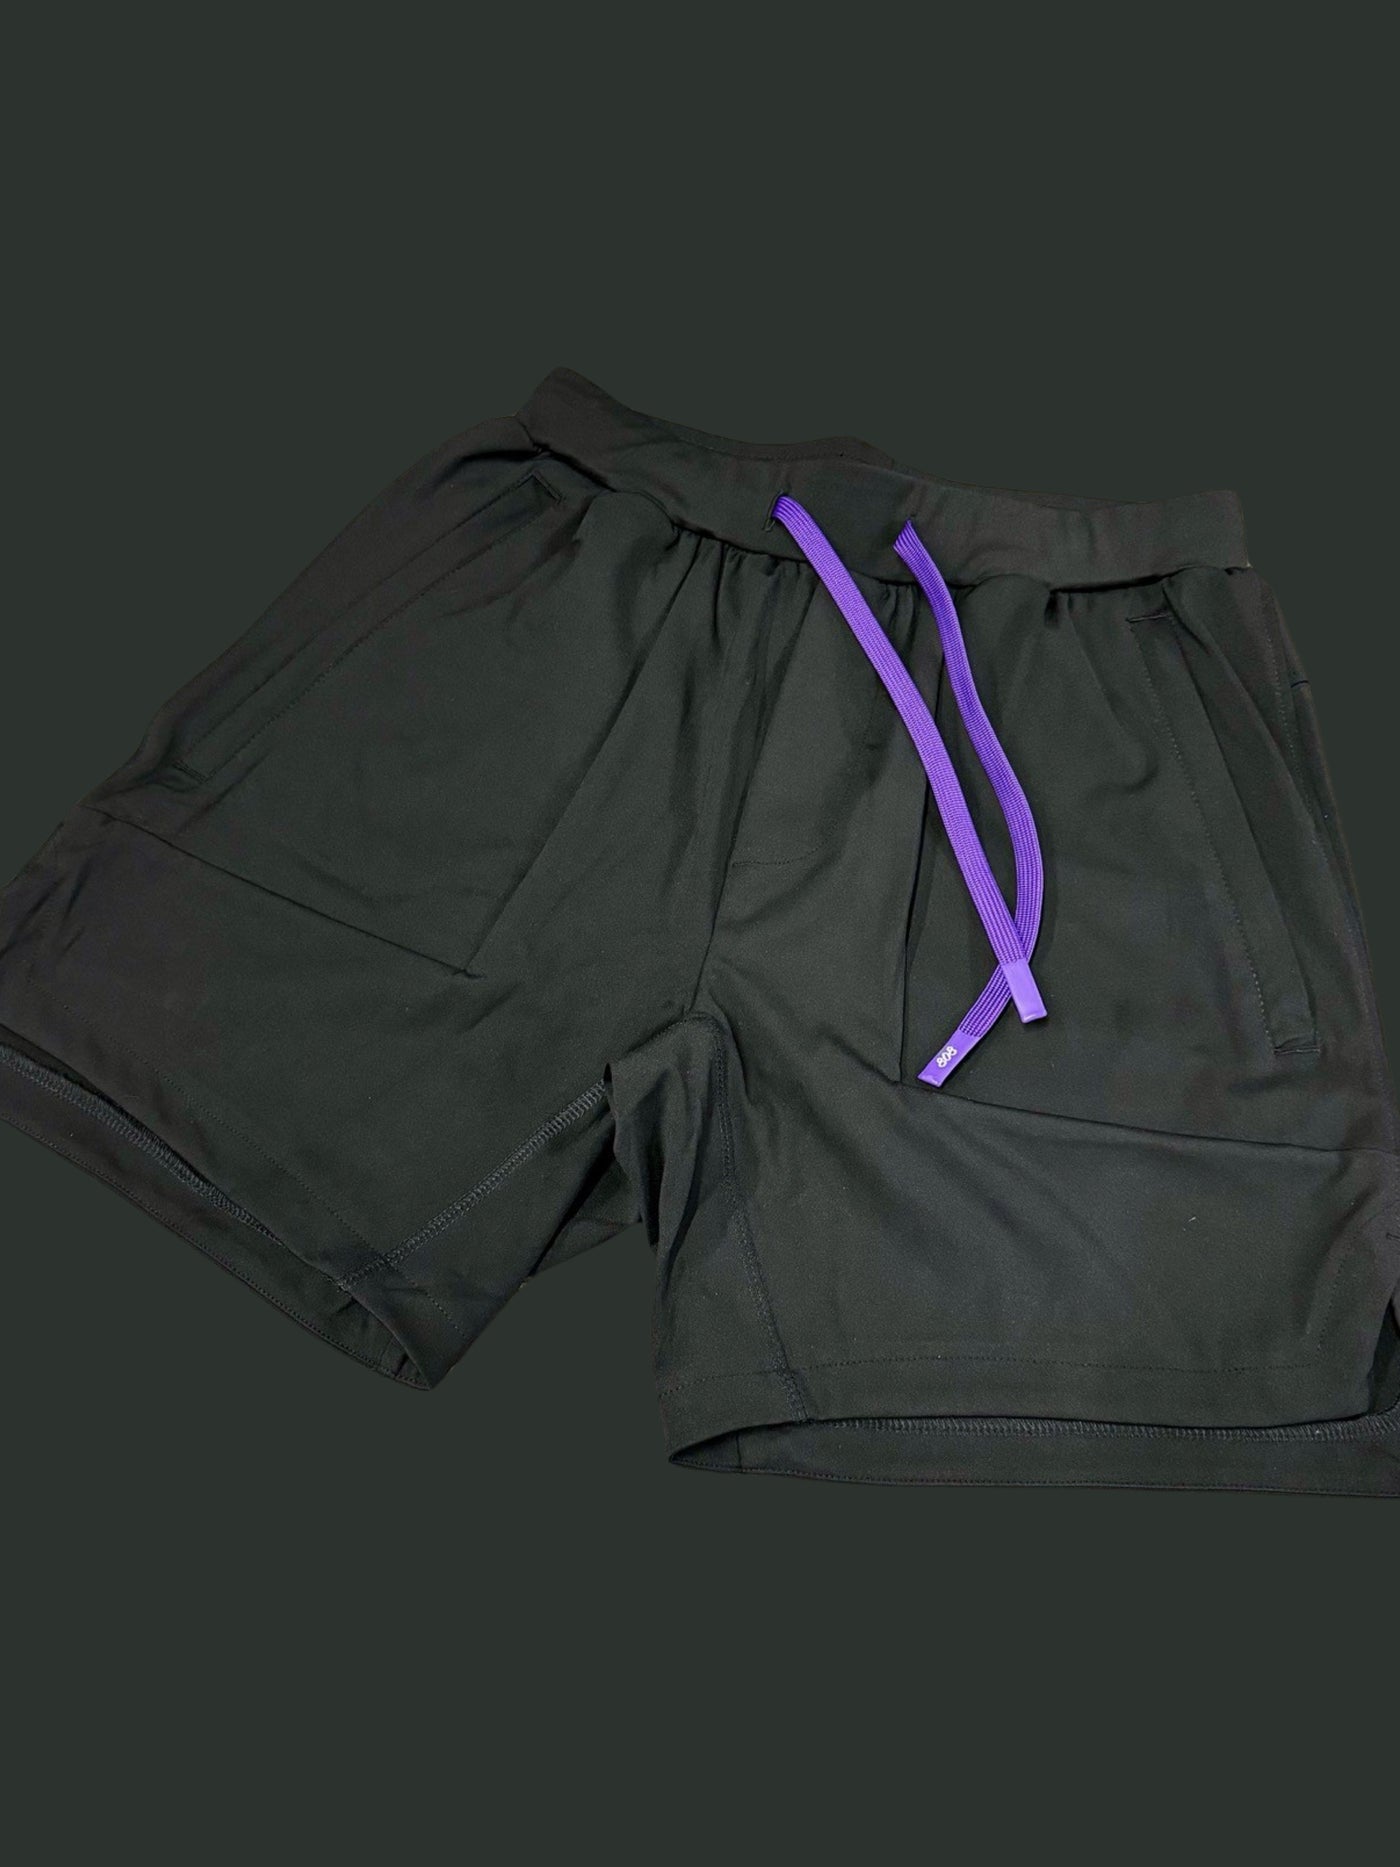 The Stingrays 2.0: Linerless Black, Premium 6" Shorts Second Edition